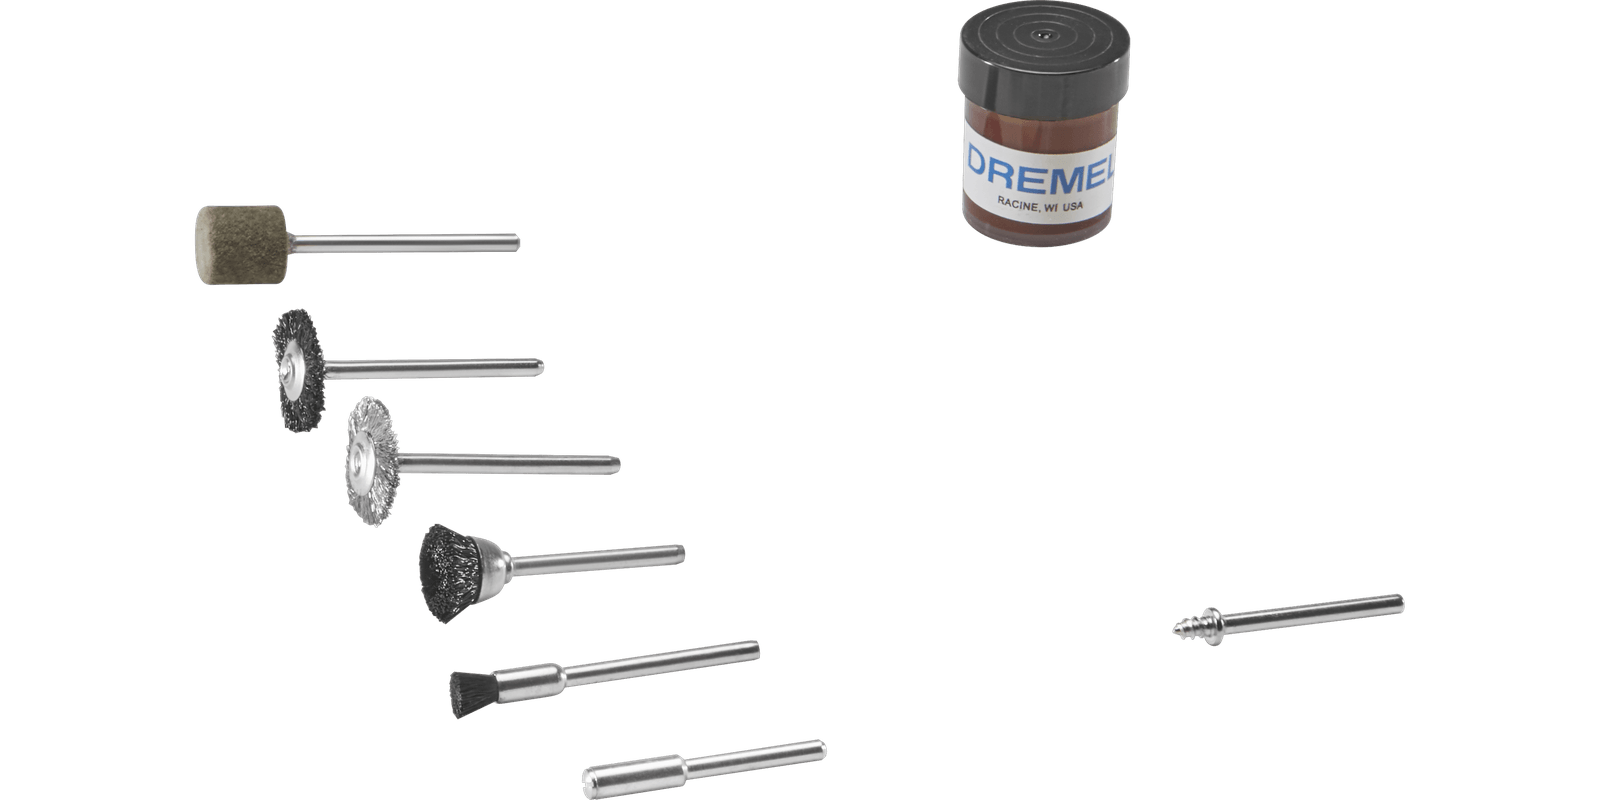 Dremel 726-02 20 PC Cleaning/Polishing Accessory Micro Kit